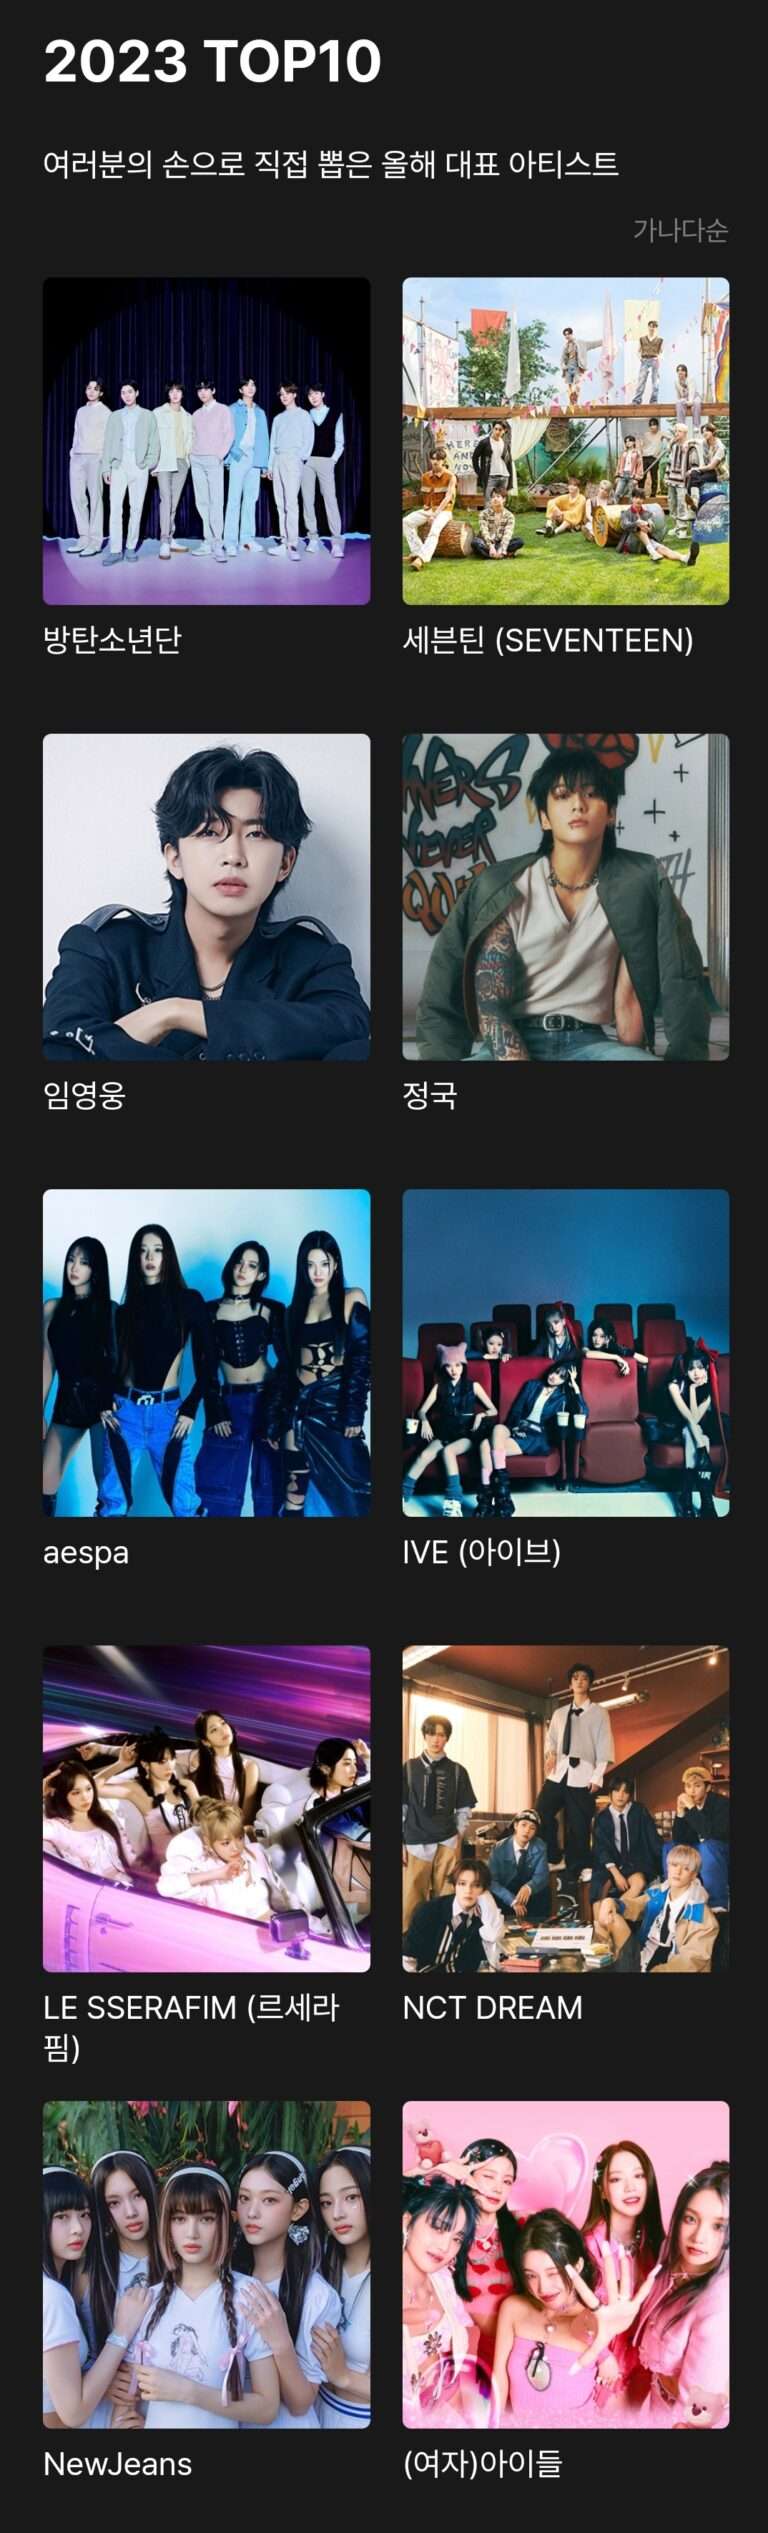 TOP 10 2023 Melon Music Awards